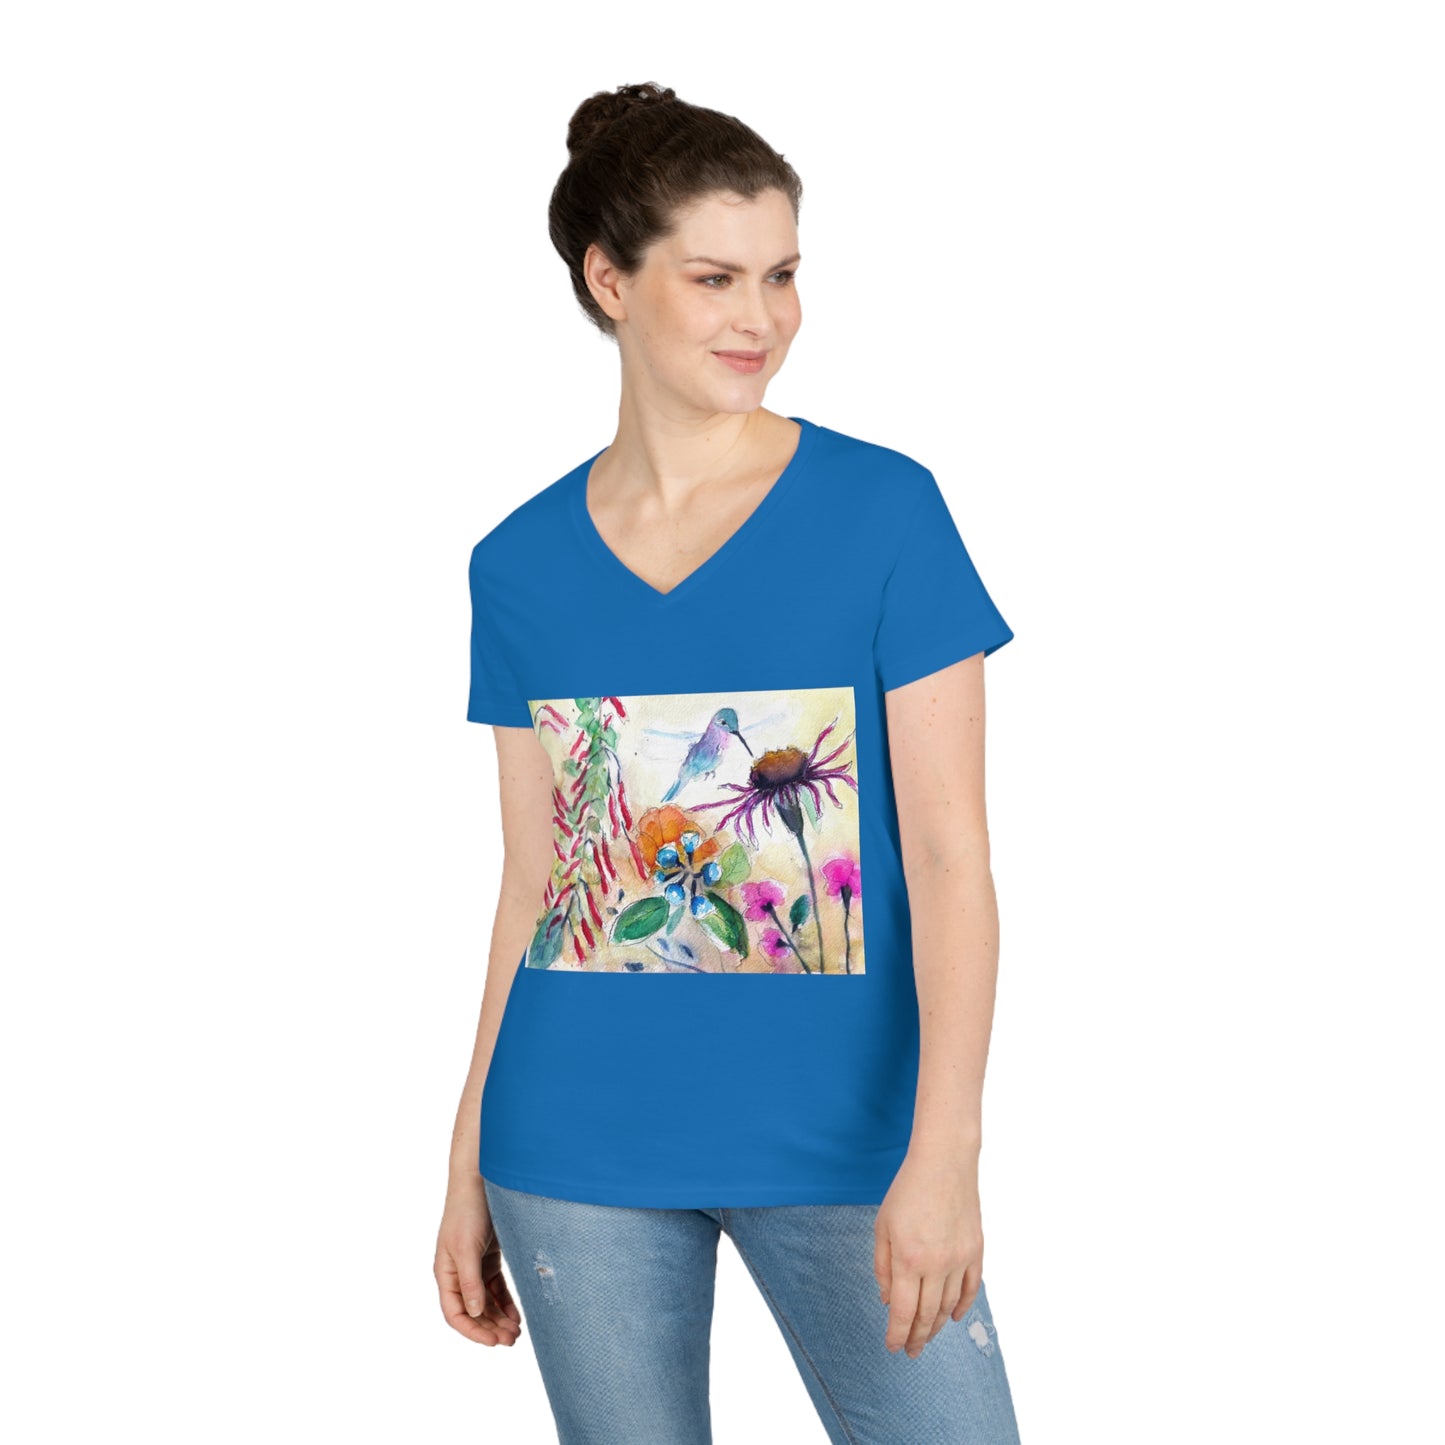 Hummingbird in the Garden Ladies' V-Neck T-Shirt